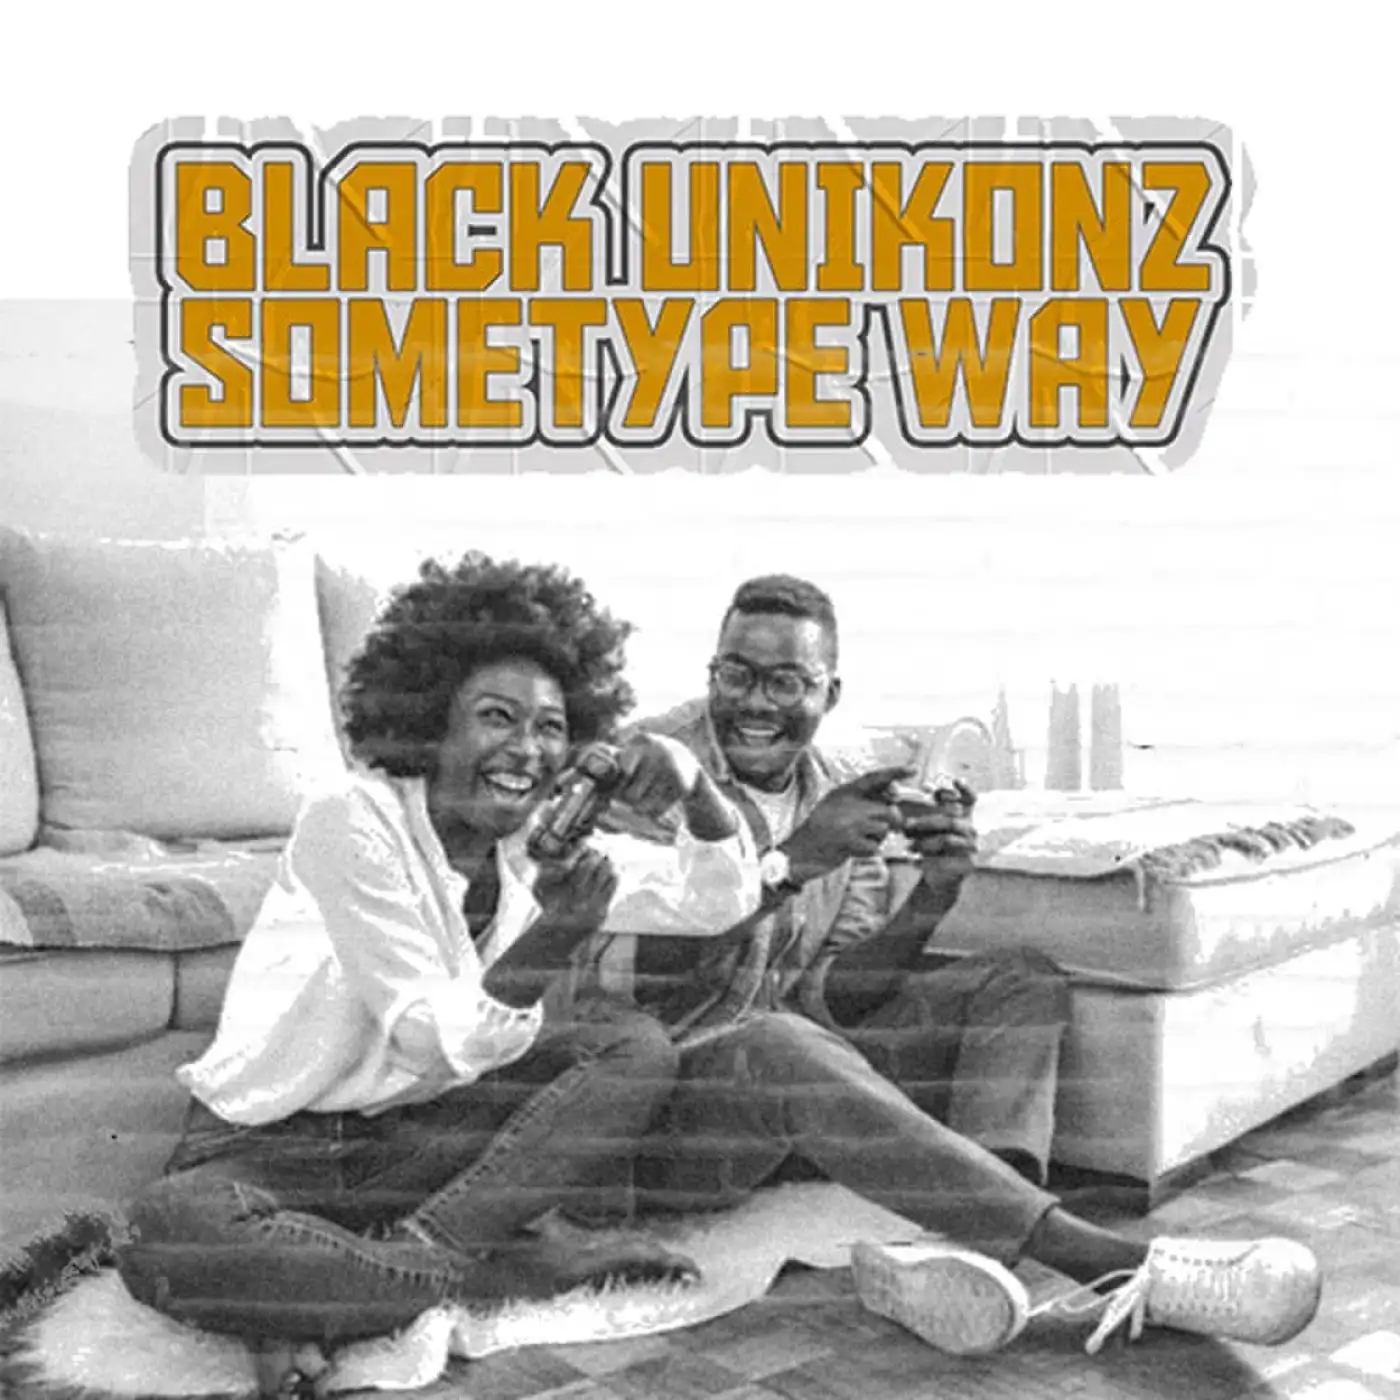 BLACKUNIKONZ-BLACKUNIKONZ - Some Type Way (Prod. Hanke Jr)-song artwork cover